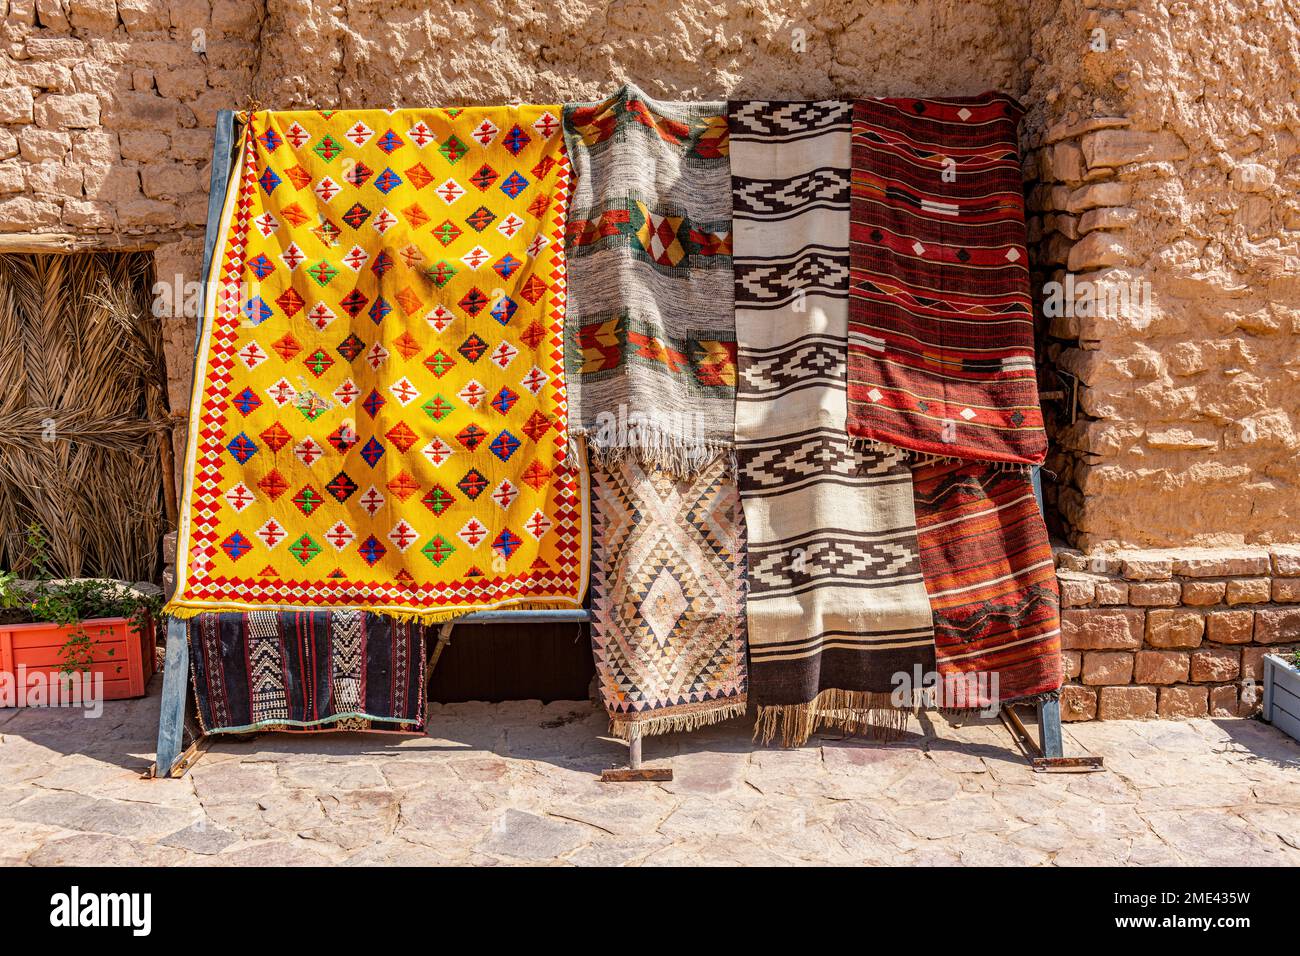 Saudi Arabia, Al-Ula, Arabic rugs hanging outdoors Stock Photo